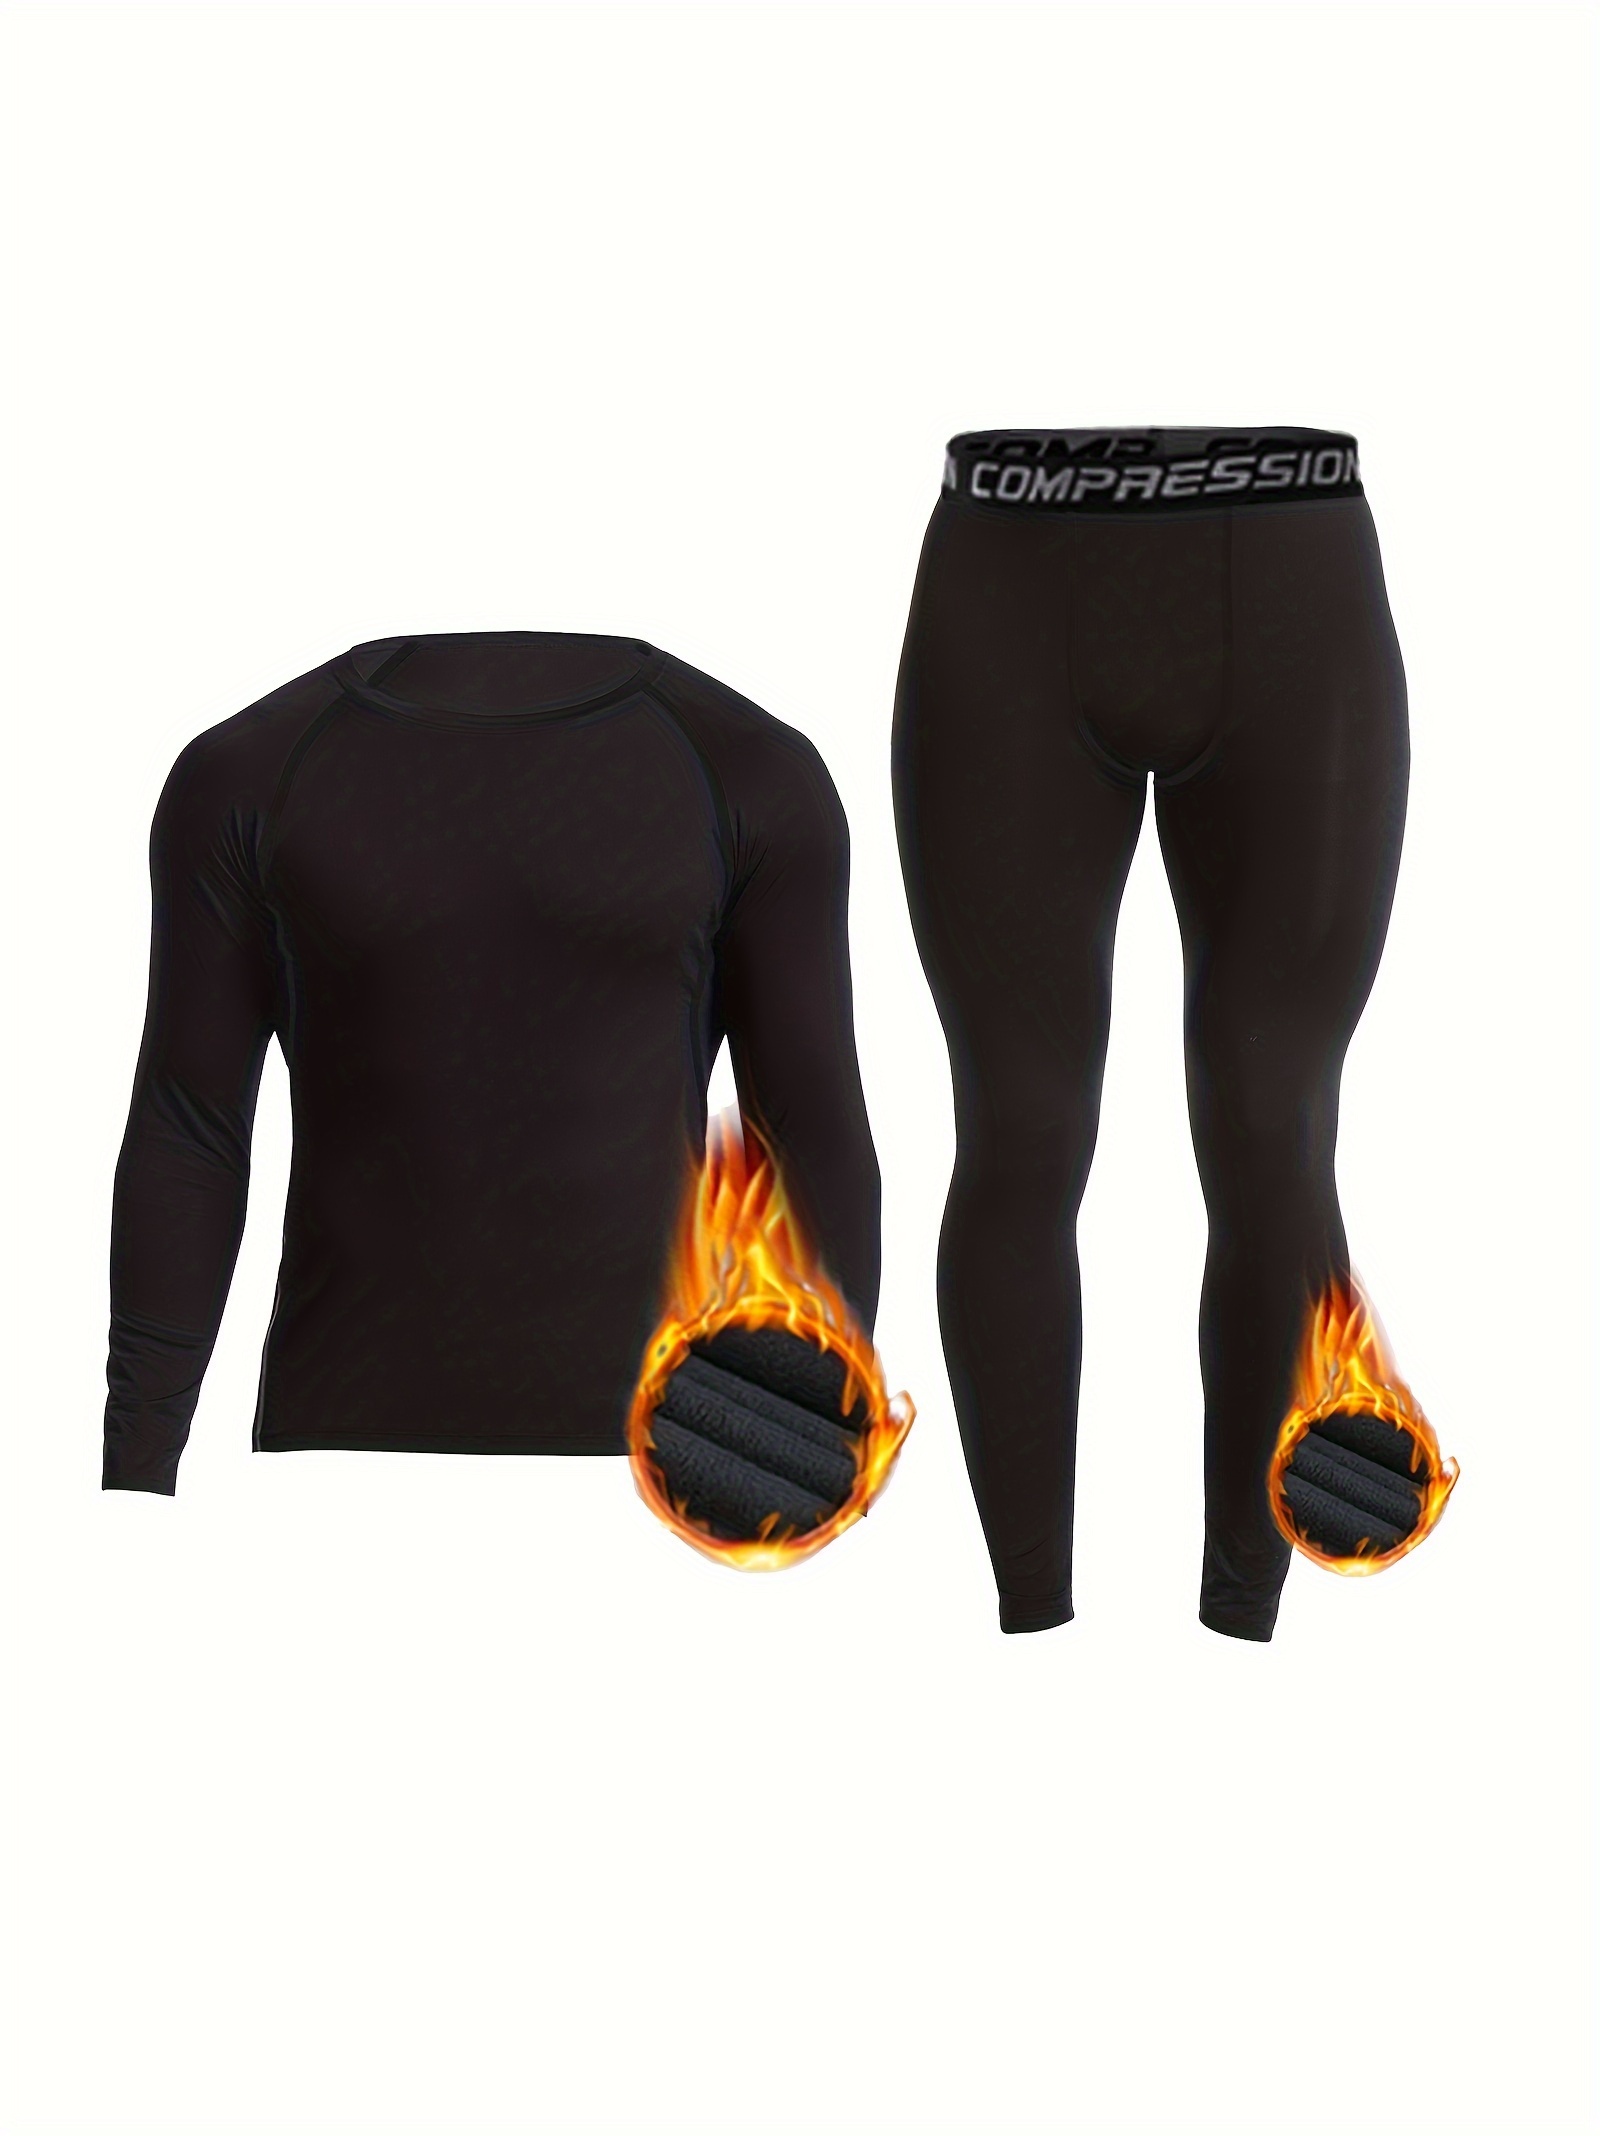 Men/Women Long Johns Pants Self-Heating Thermal Underwear Set